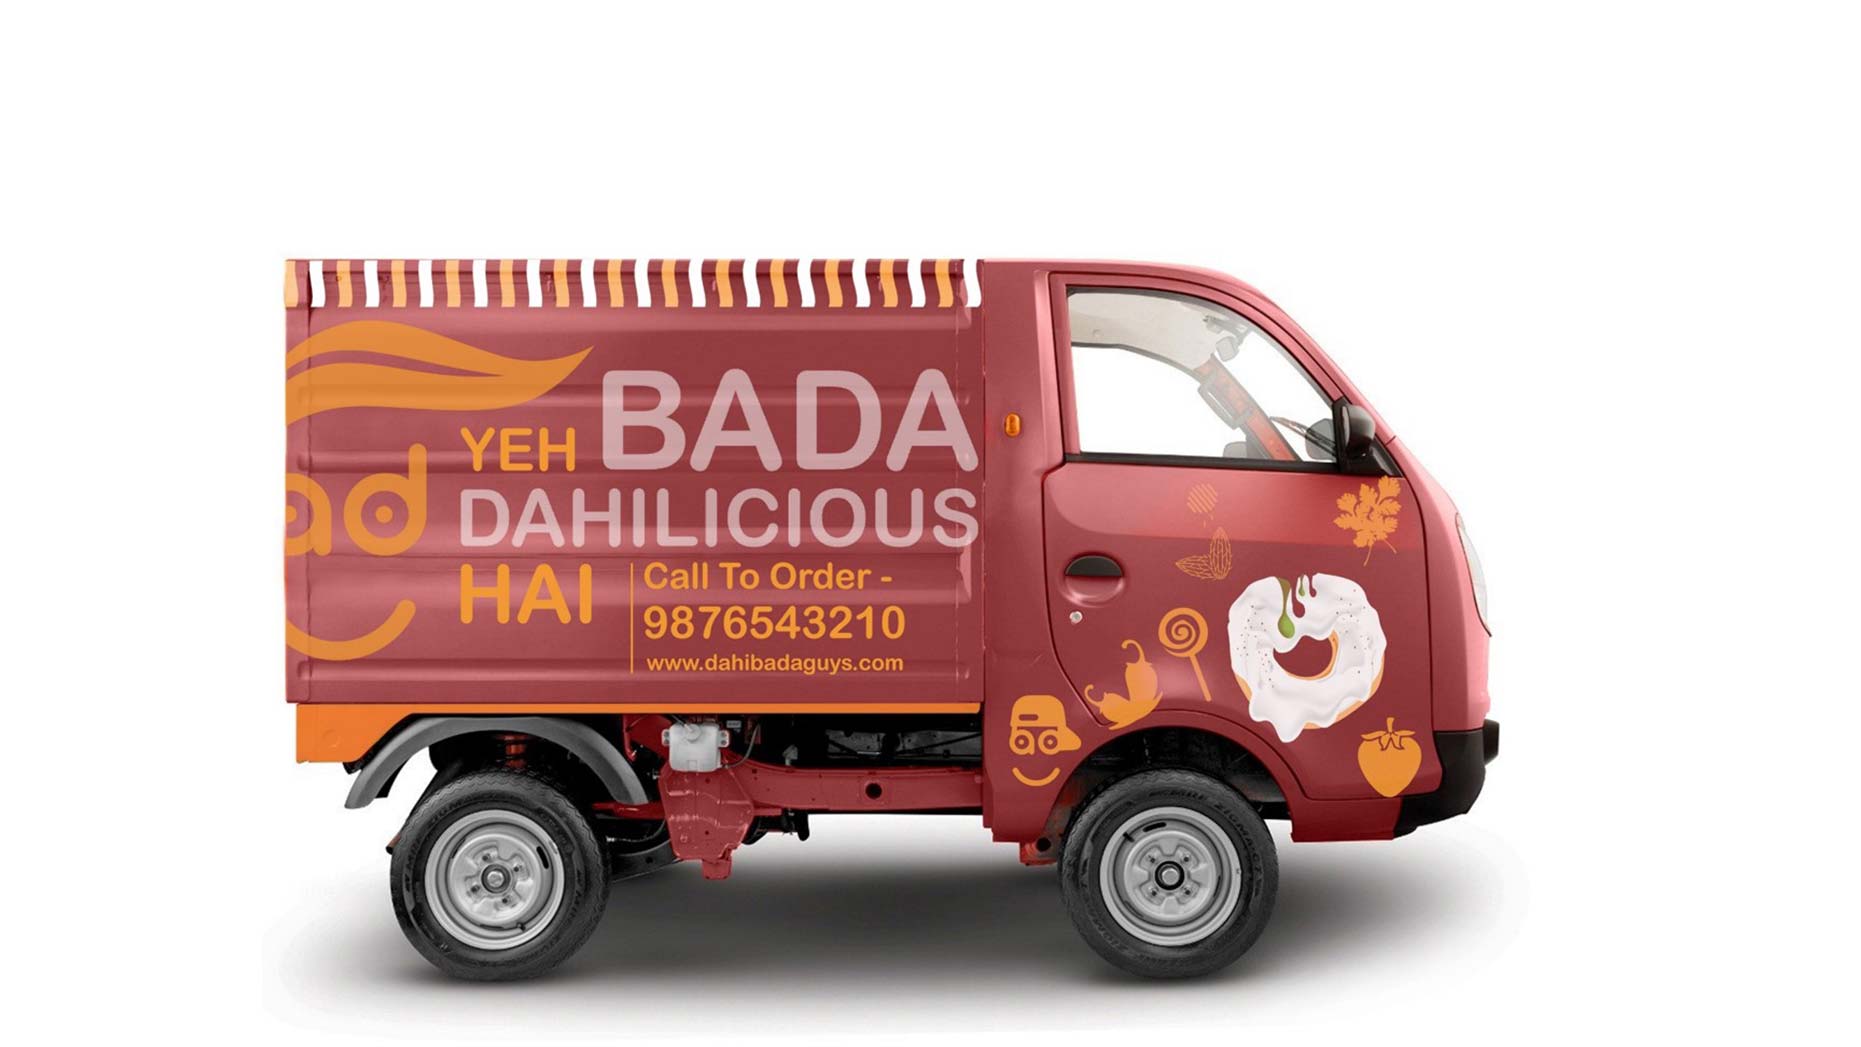 Dahi bada guys food delivery